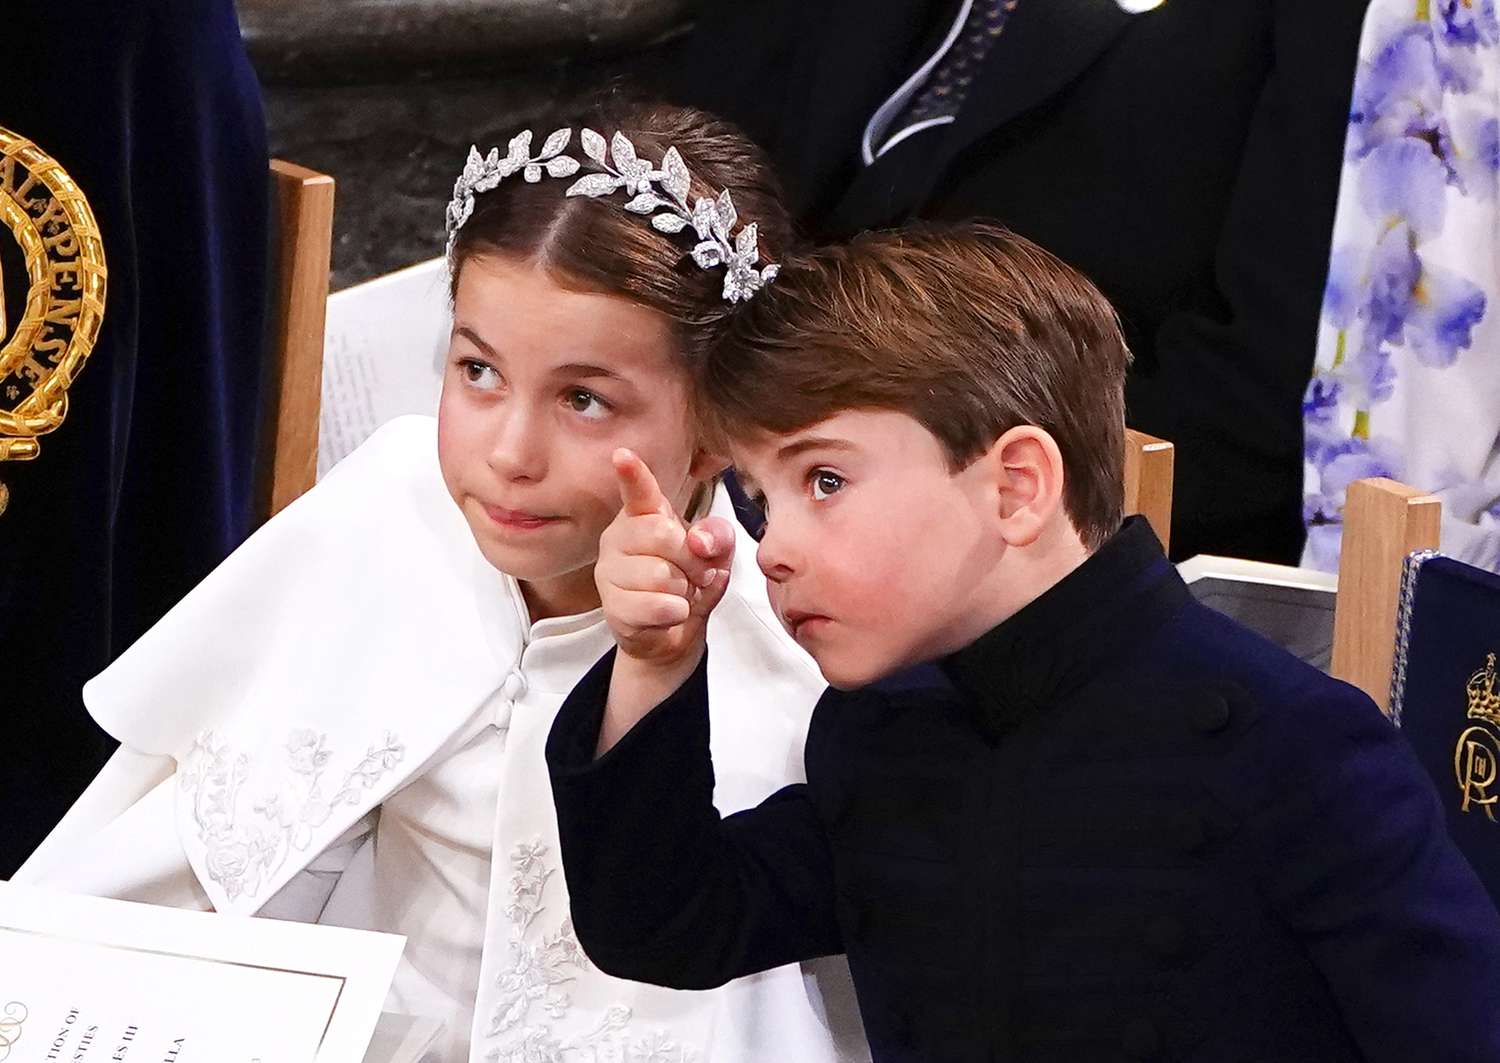 Prince Louis pointing next to Princess Charlotte